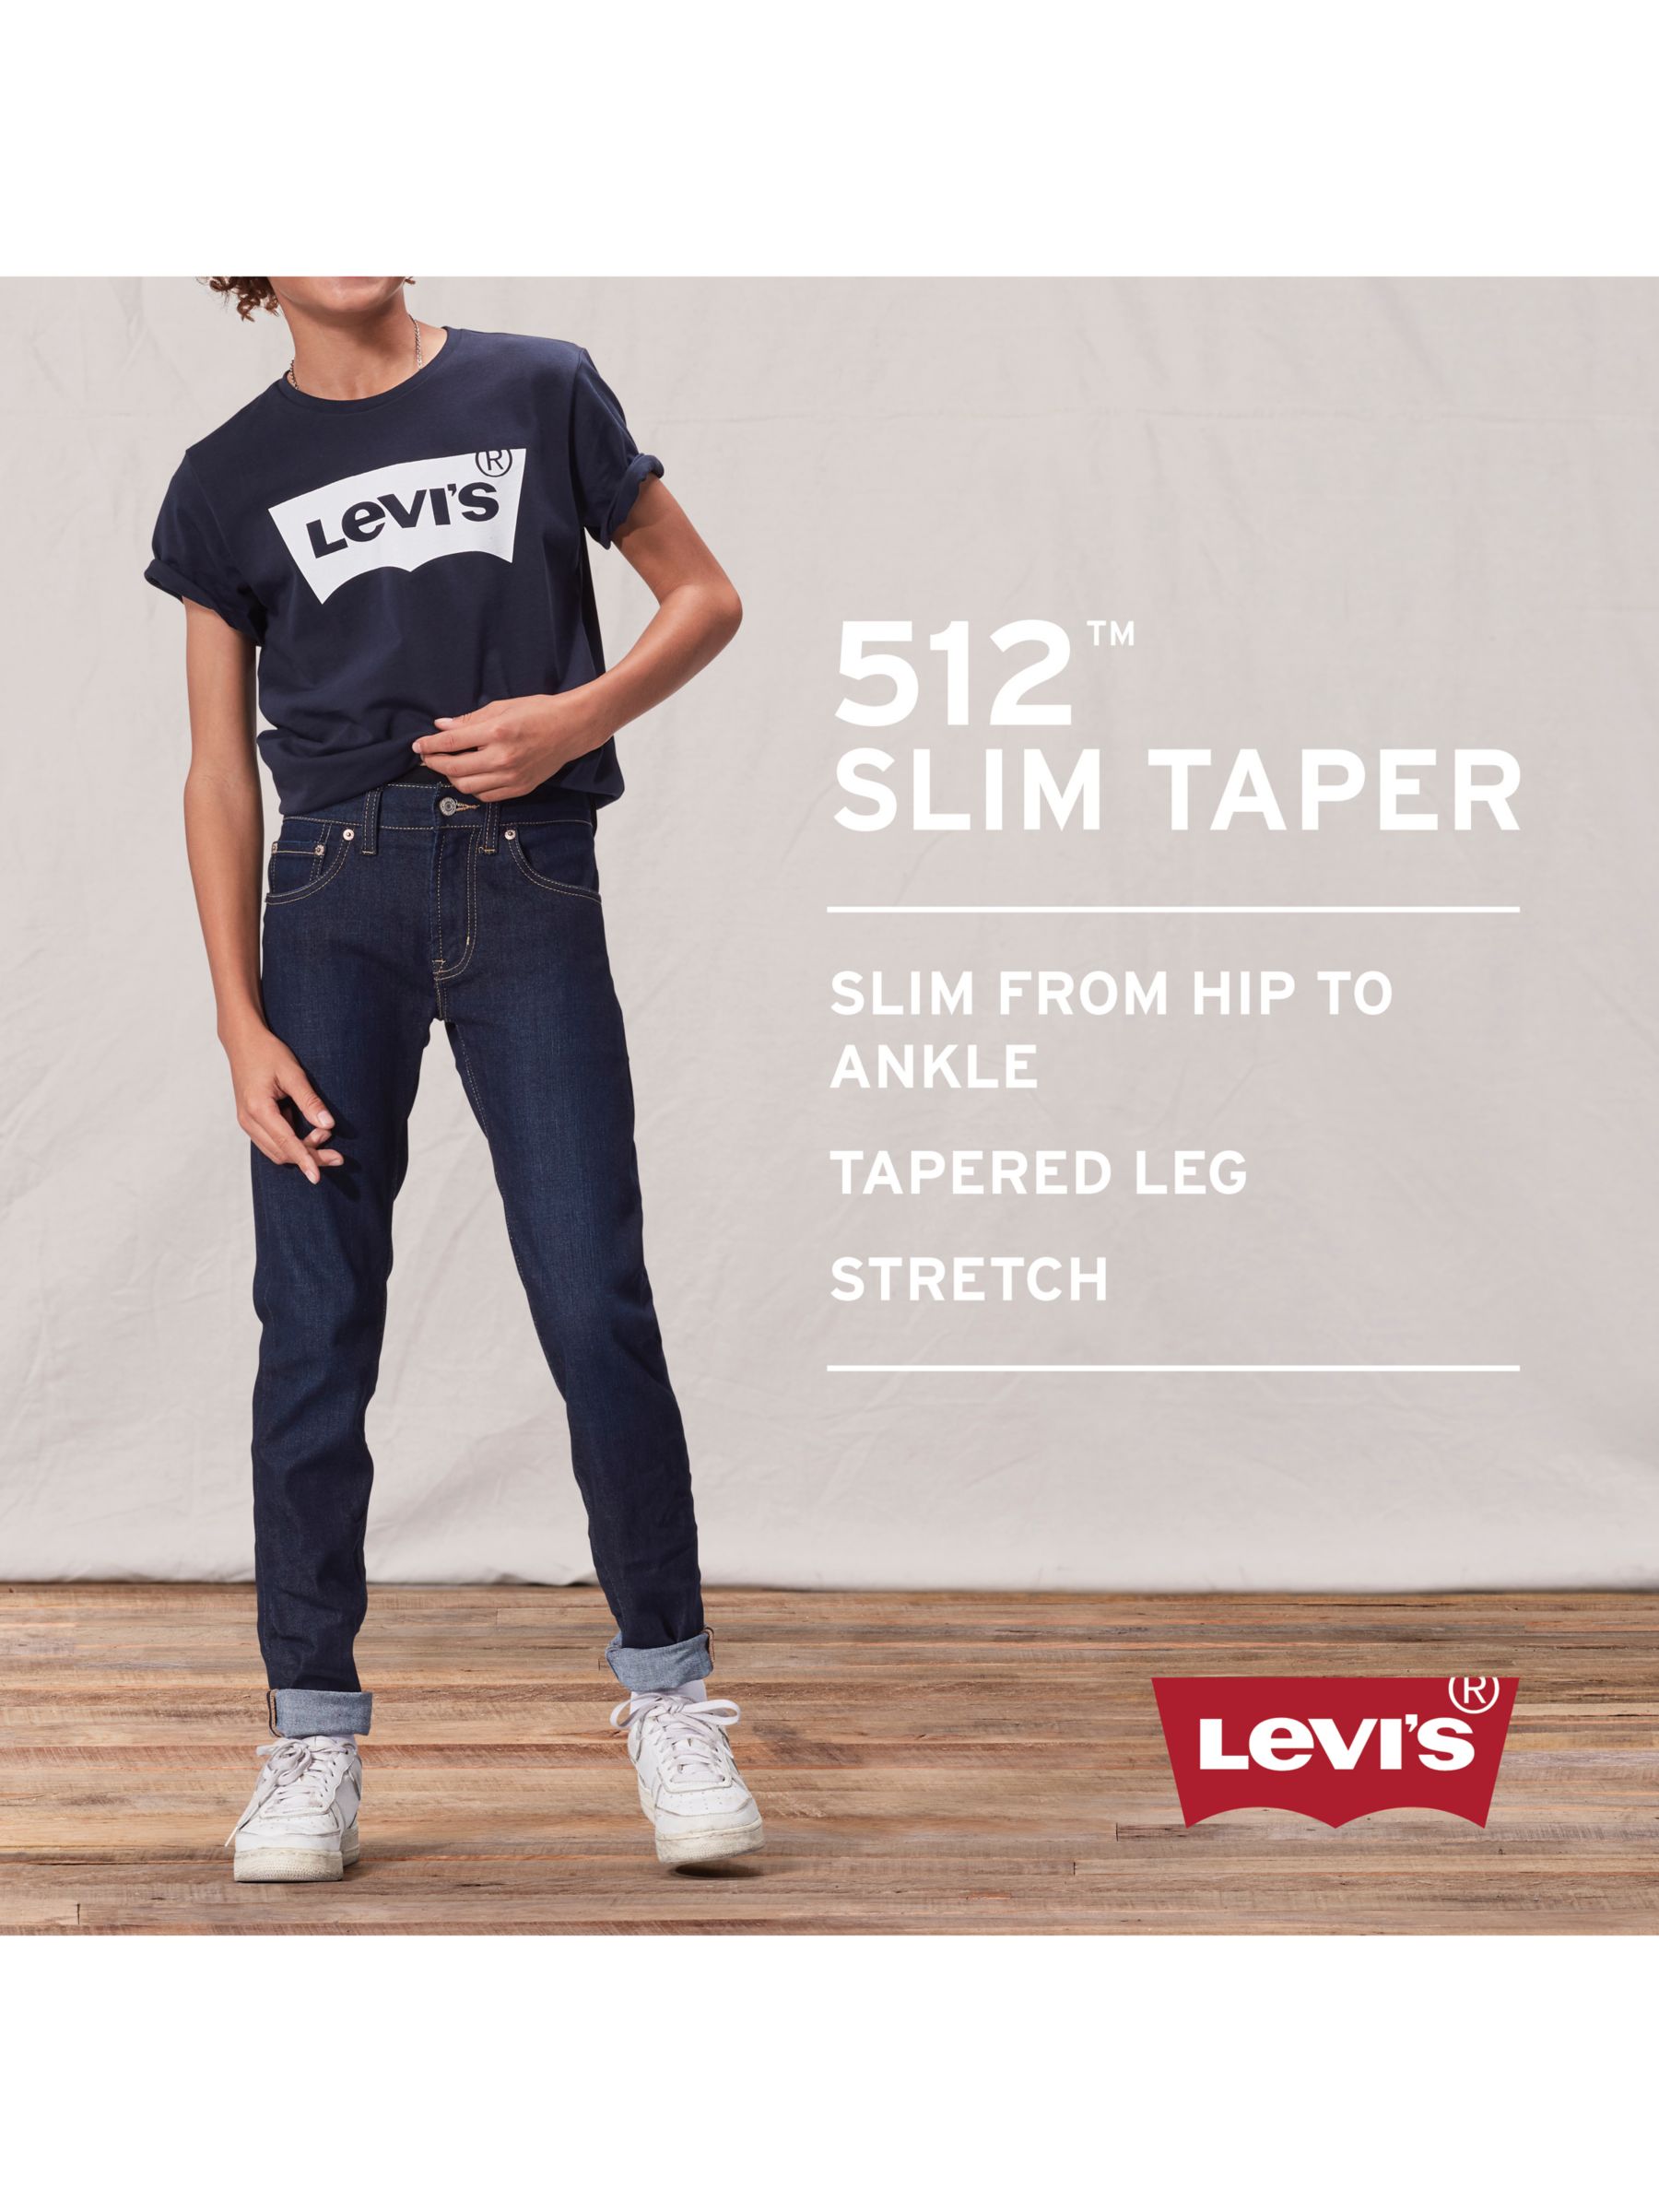 Levi's Kids' 512 Slim Tapered Dreams, Dark Blue at John Lewis & Partners